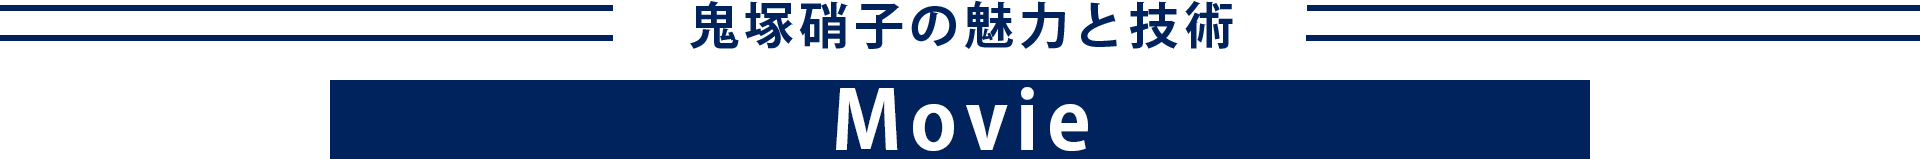 Movie Title (PC)